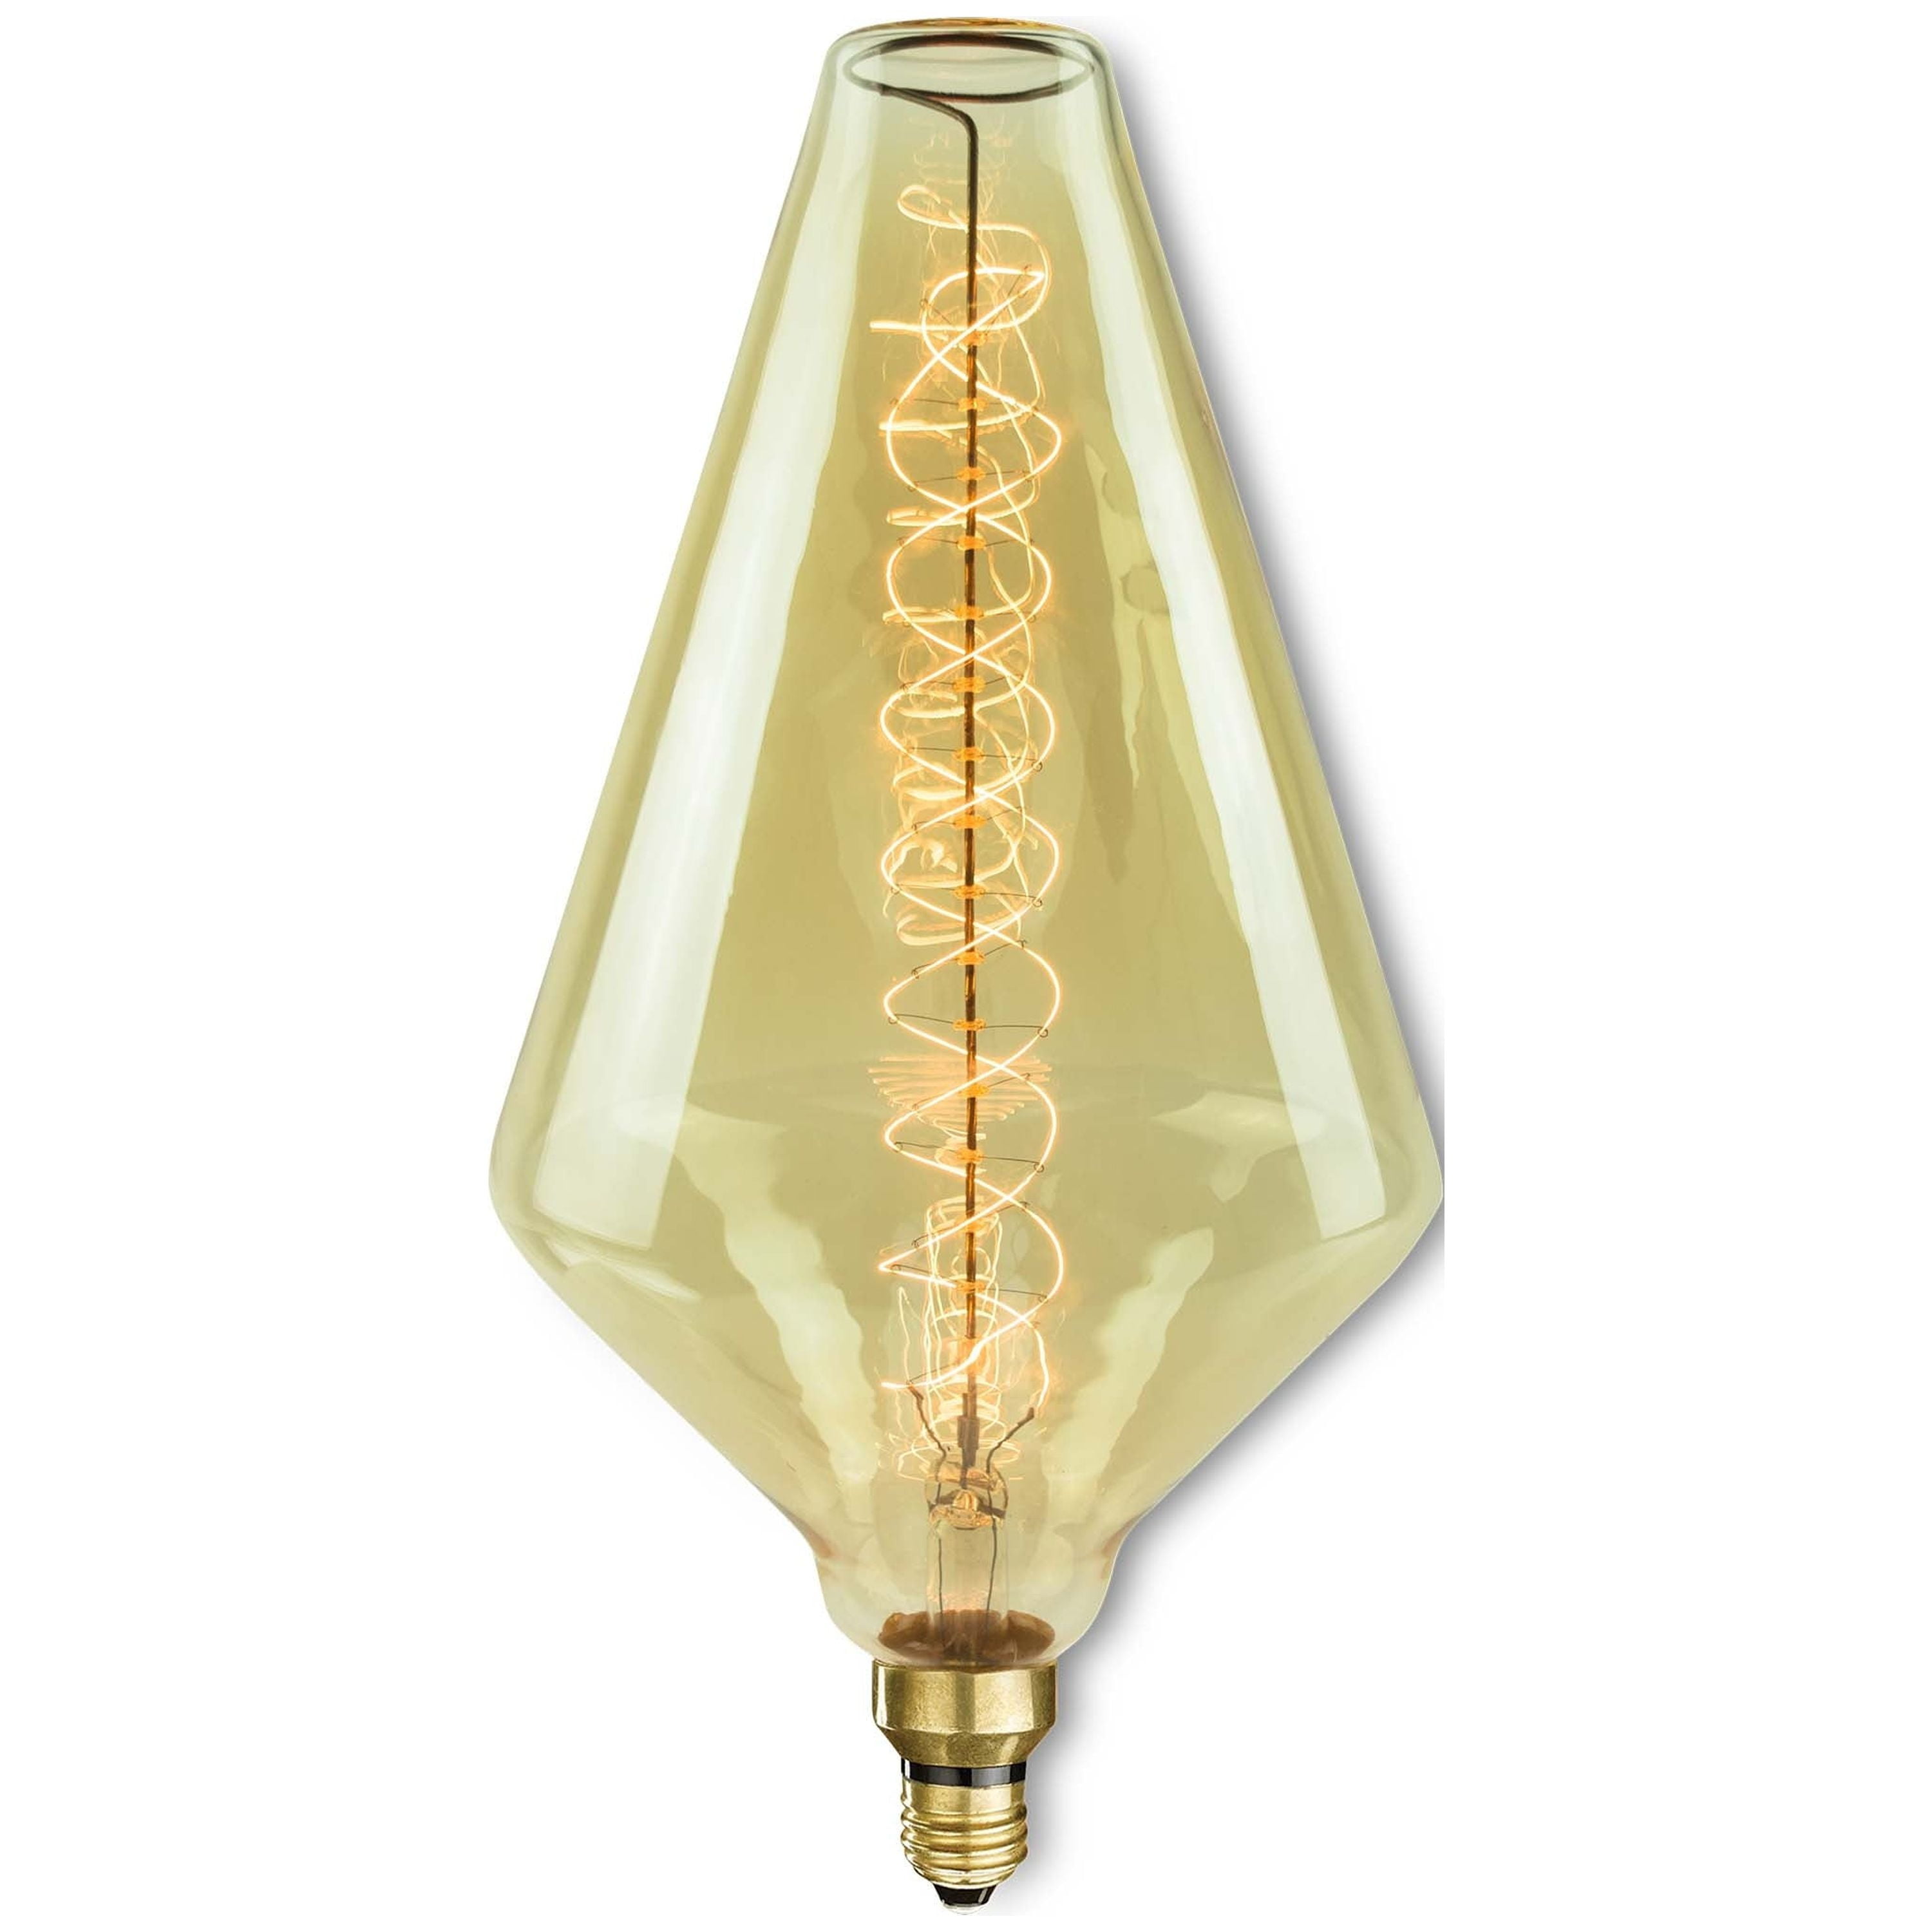 Picture of Bulbrite Grand Nostalgic Collection 60 Watt Dimmable Diamond  Shape Oversized Decorative Incandescent Light Bulb with Medium (E26) Base  2200K Amber Light  Antique Glass Finish